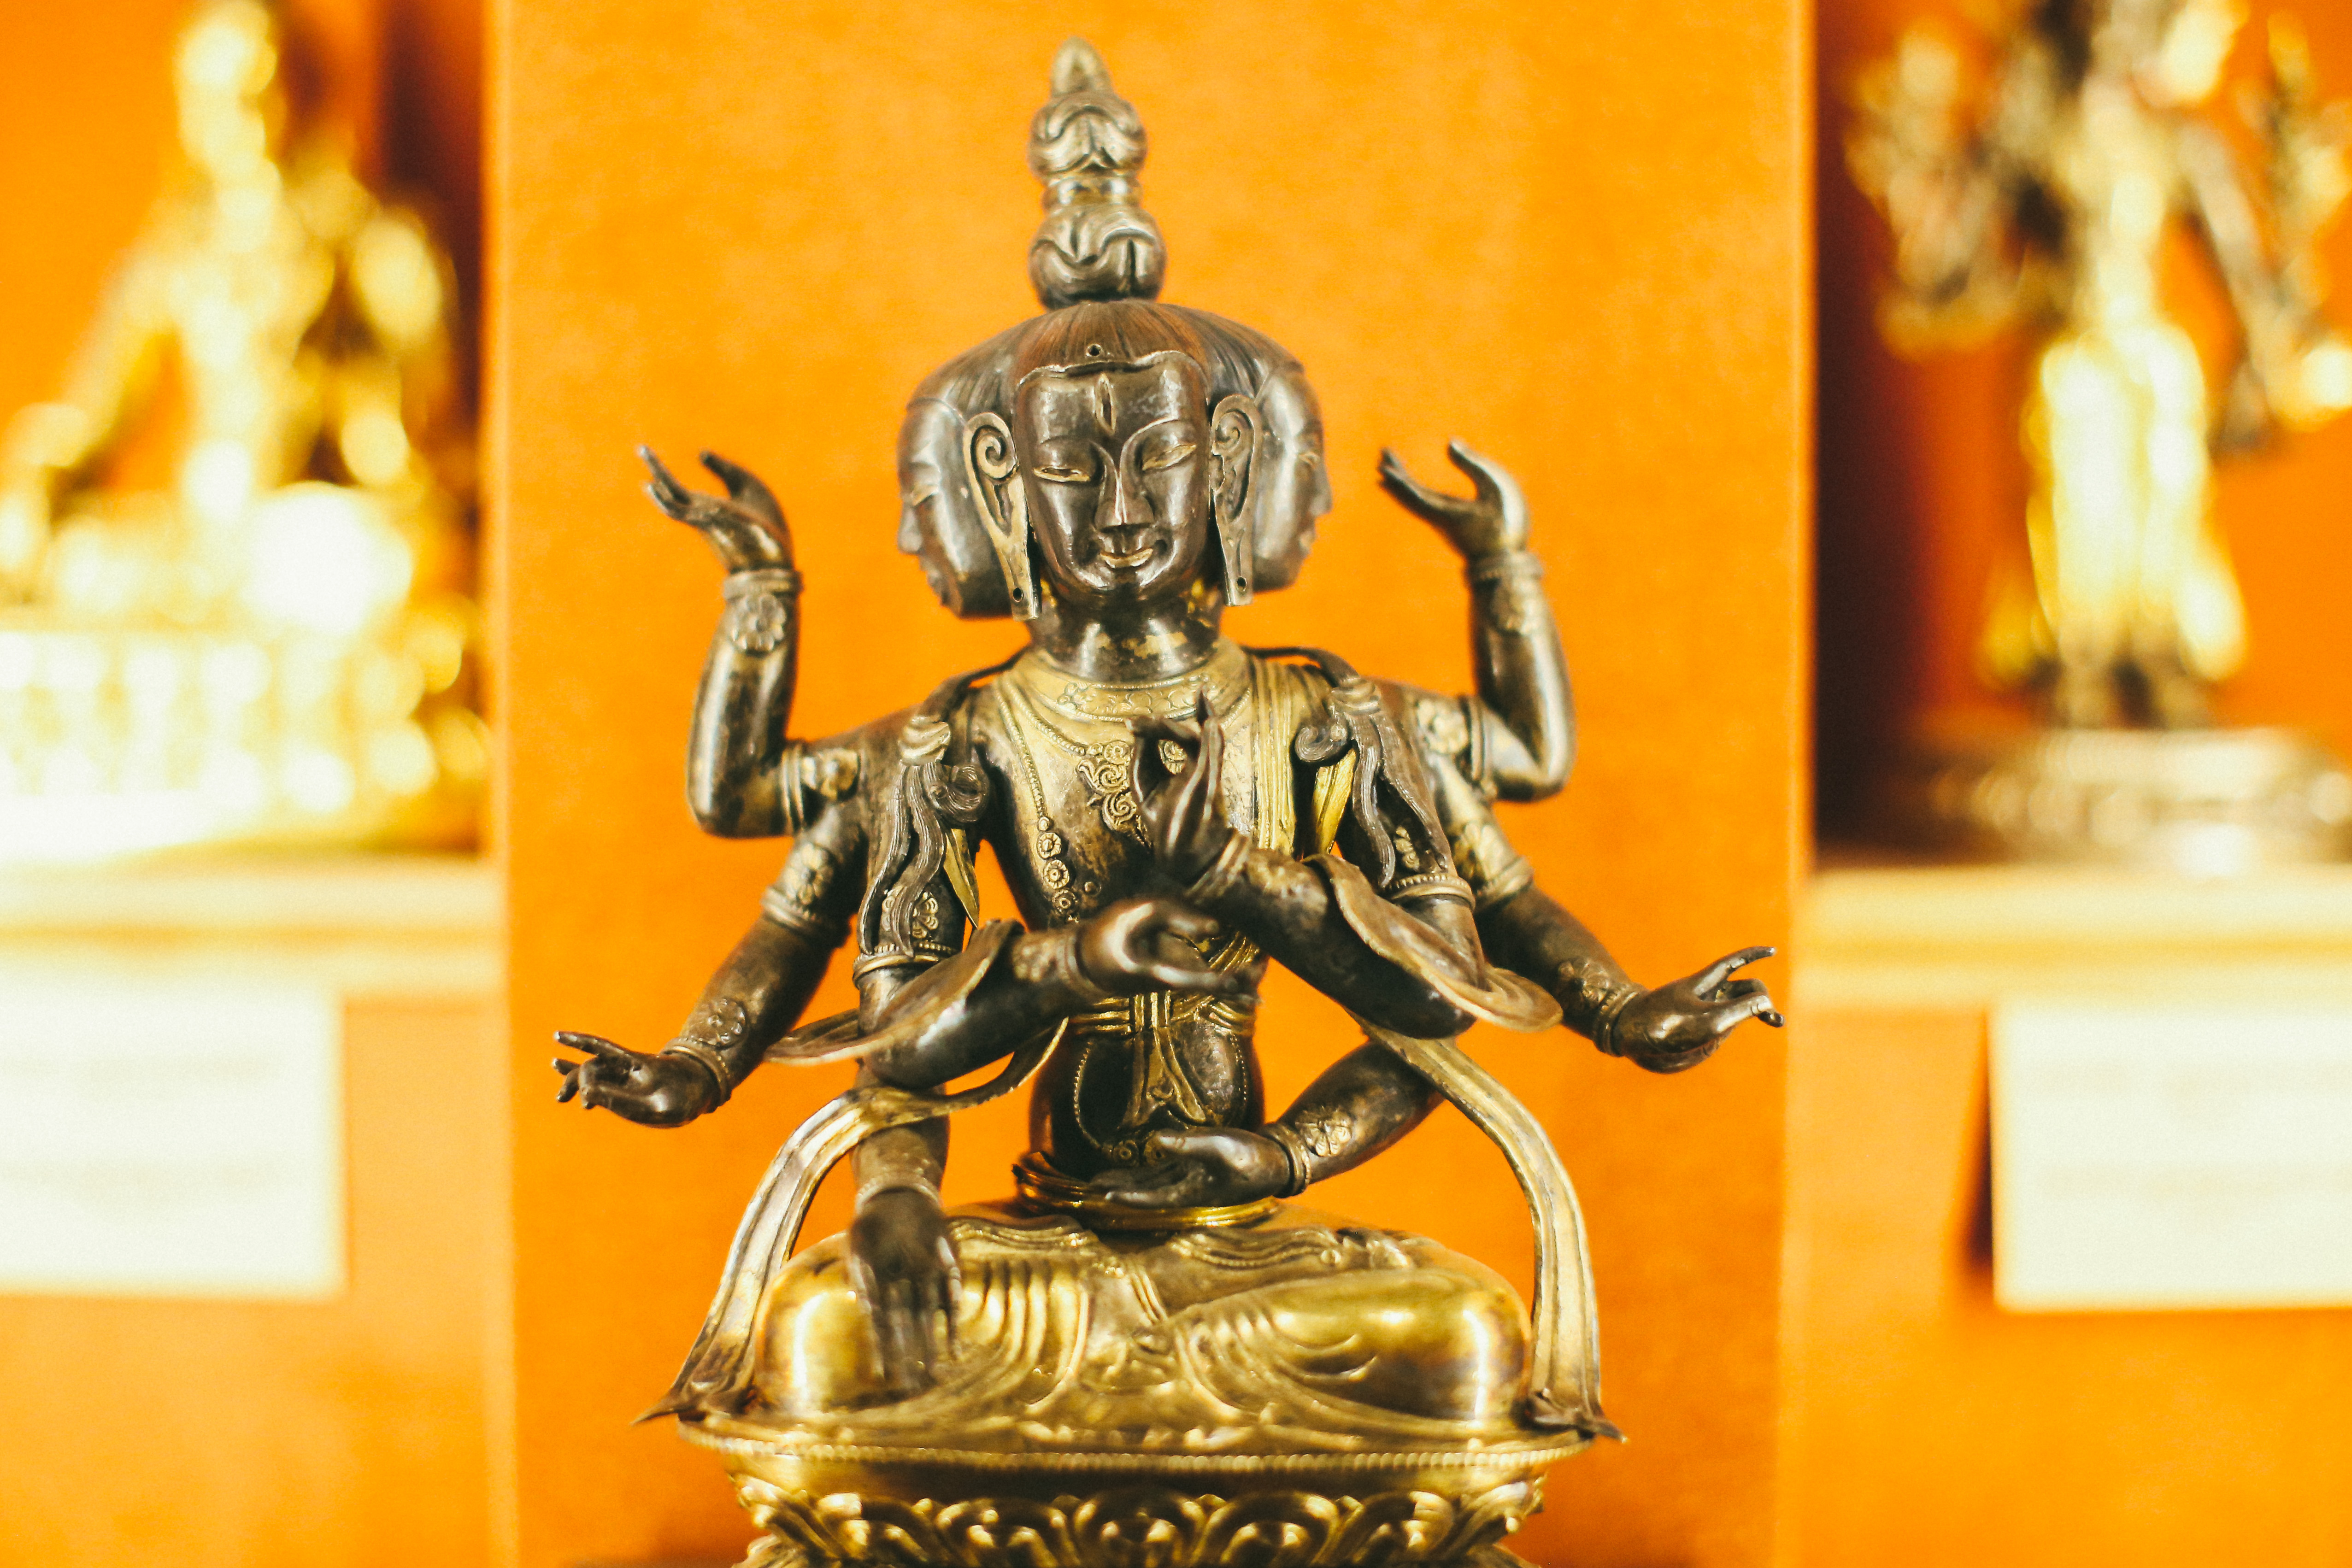 Фото. Експонат музею: бронзова скульптура триголового божества з чотирма парами рук